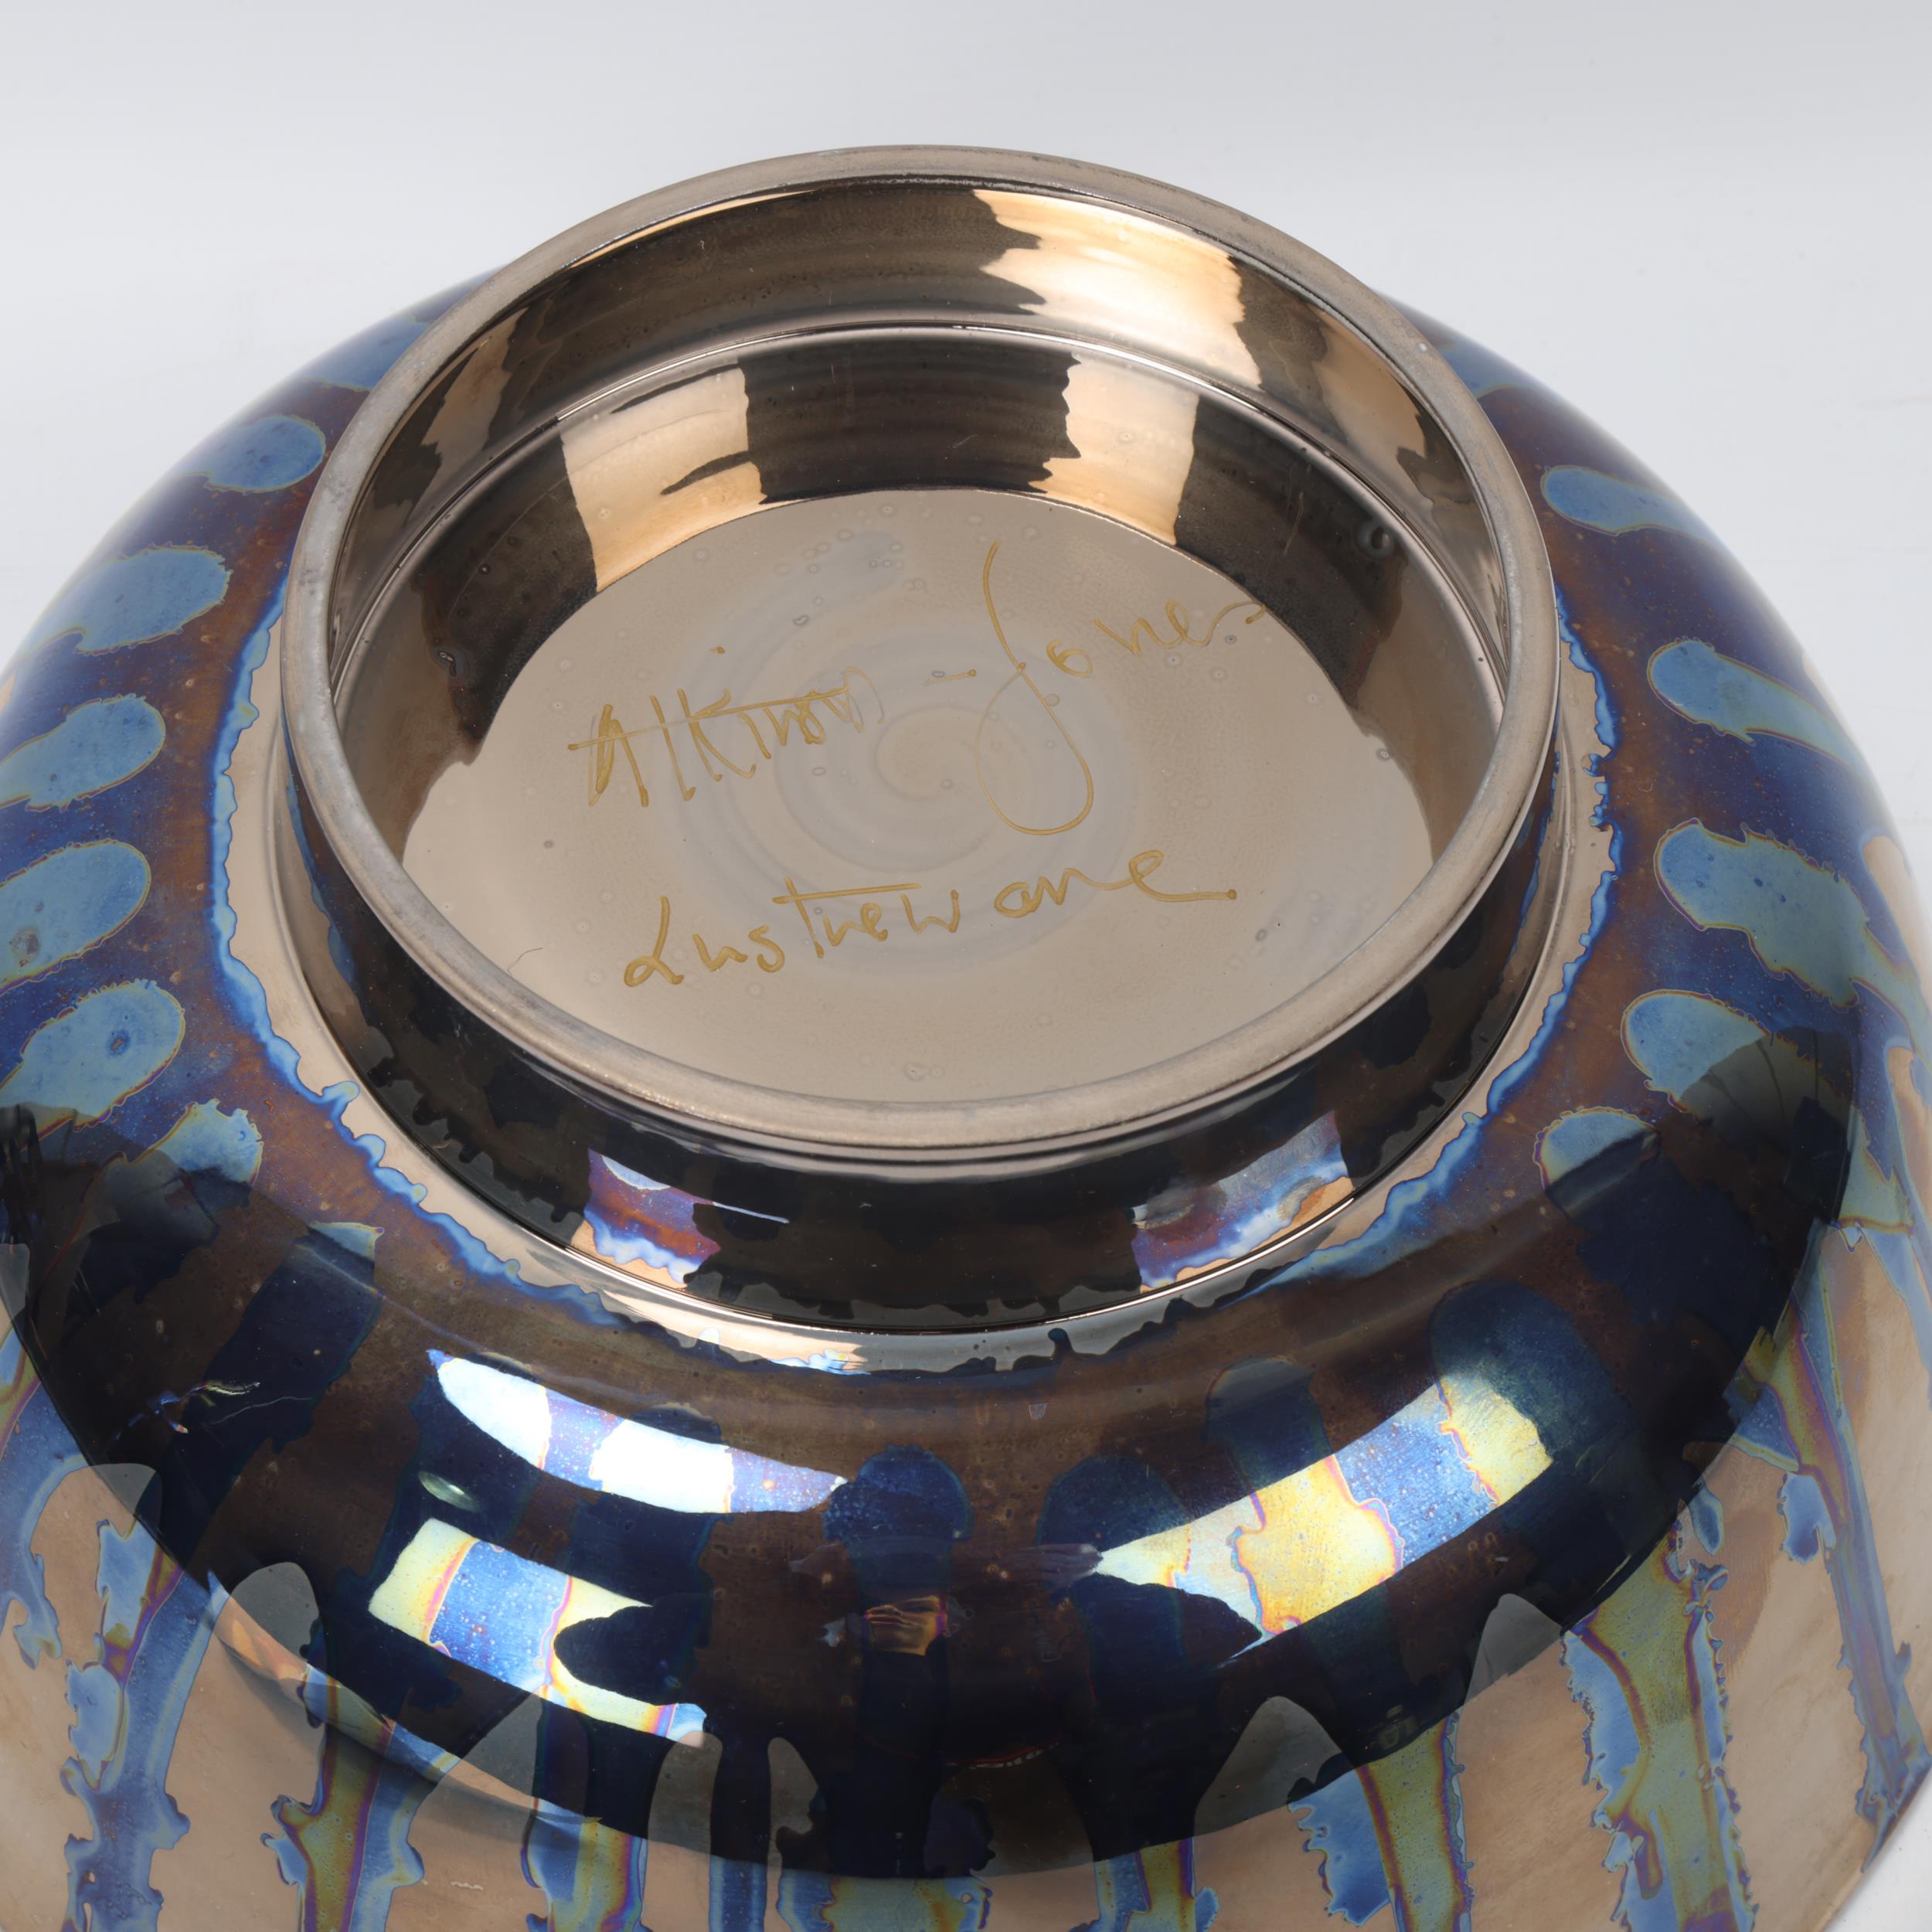 CAROLINE & STEPHEN ATKINSON-JONES, a slip-cast fruit bowl, with silver lustre glaze, signed to base, - Image 3 of 3